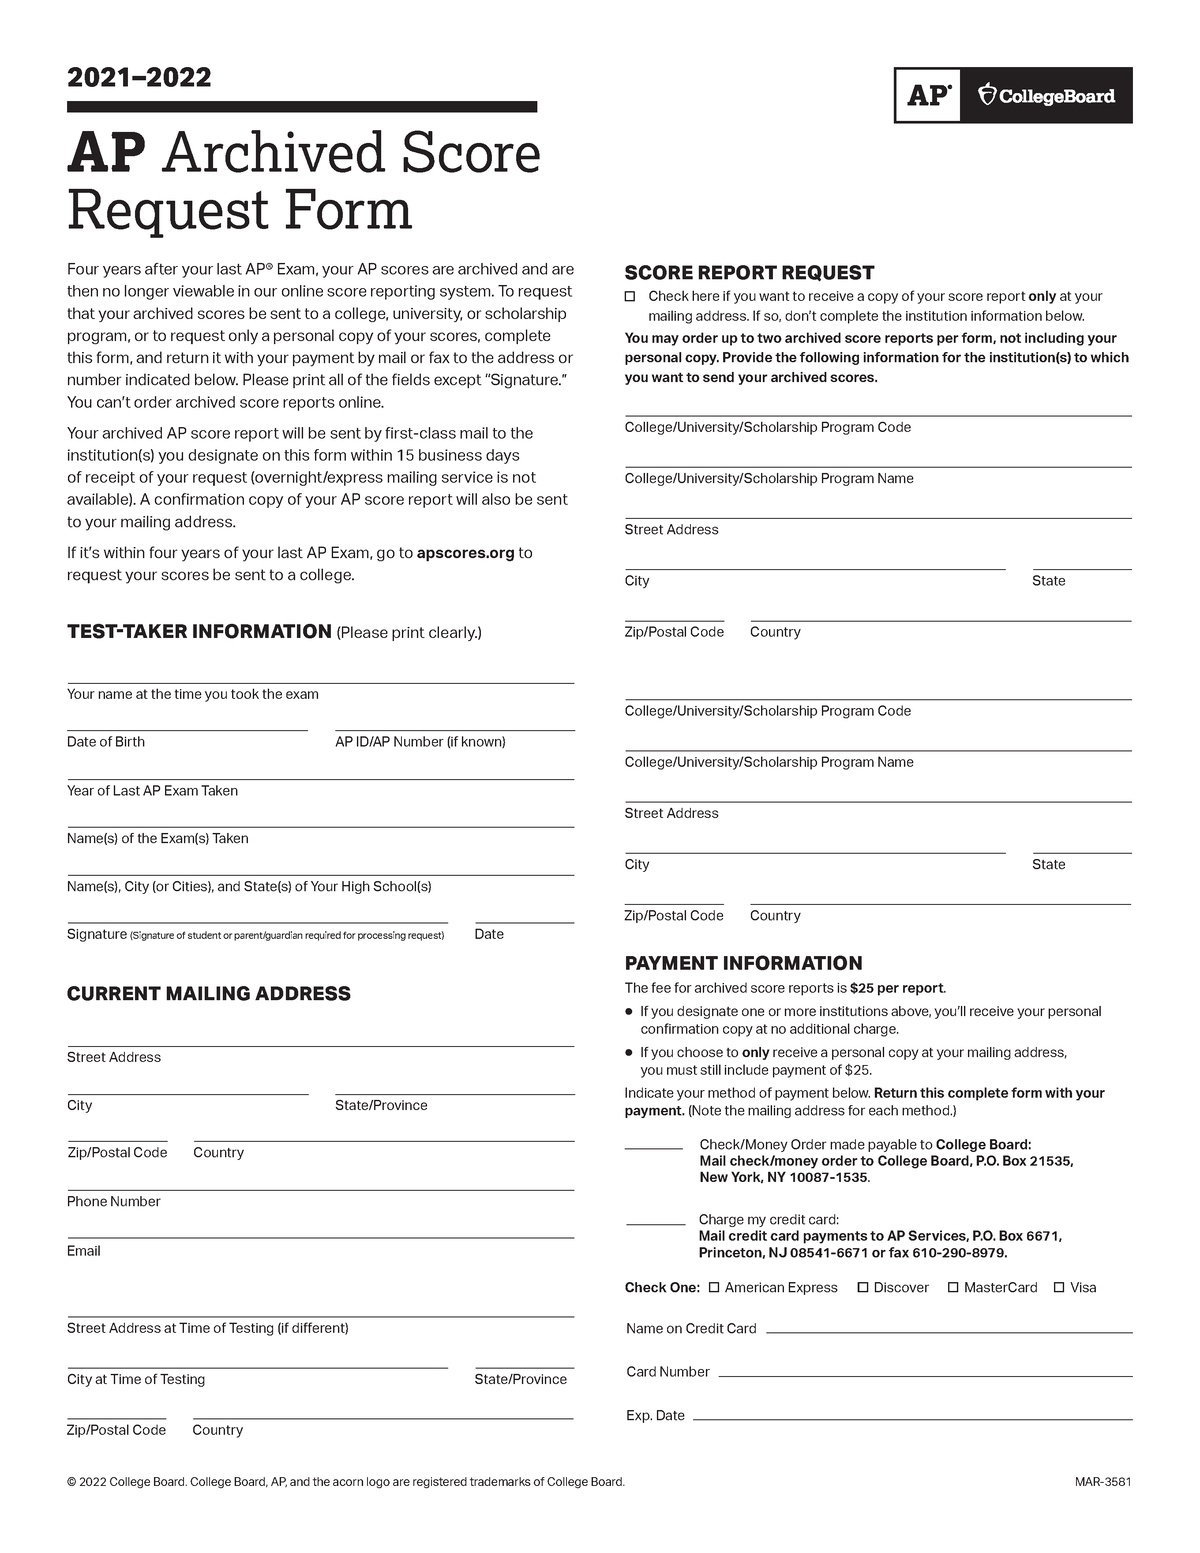 Ap Archived Score Request Form